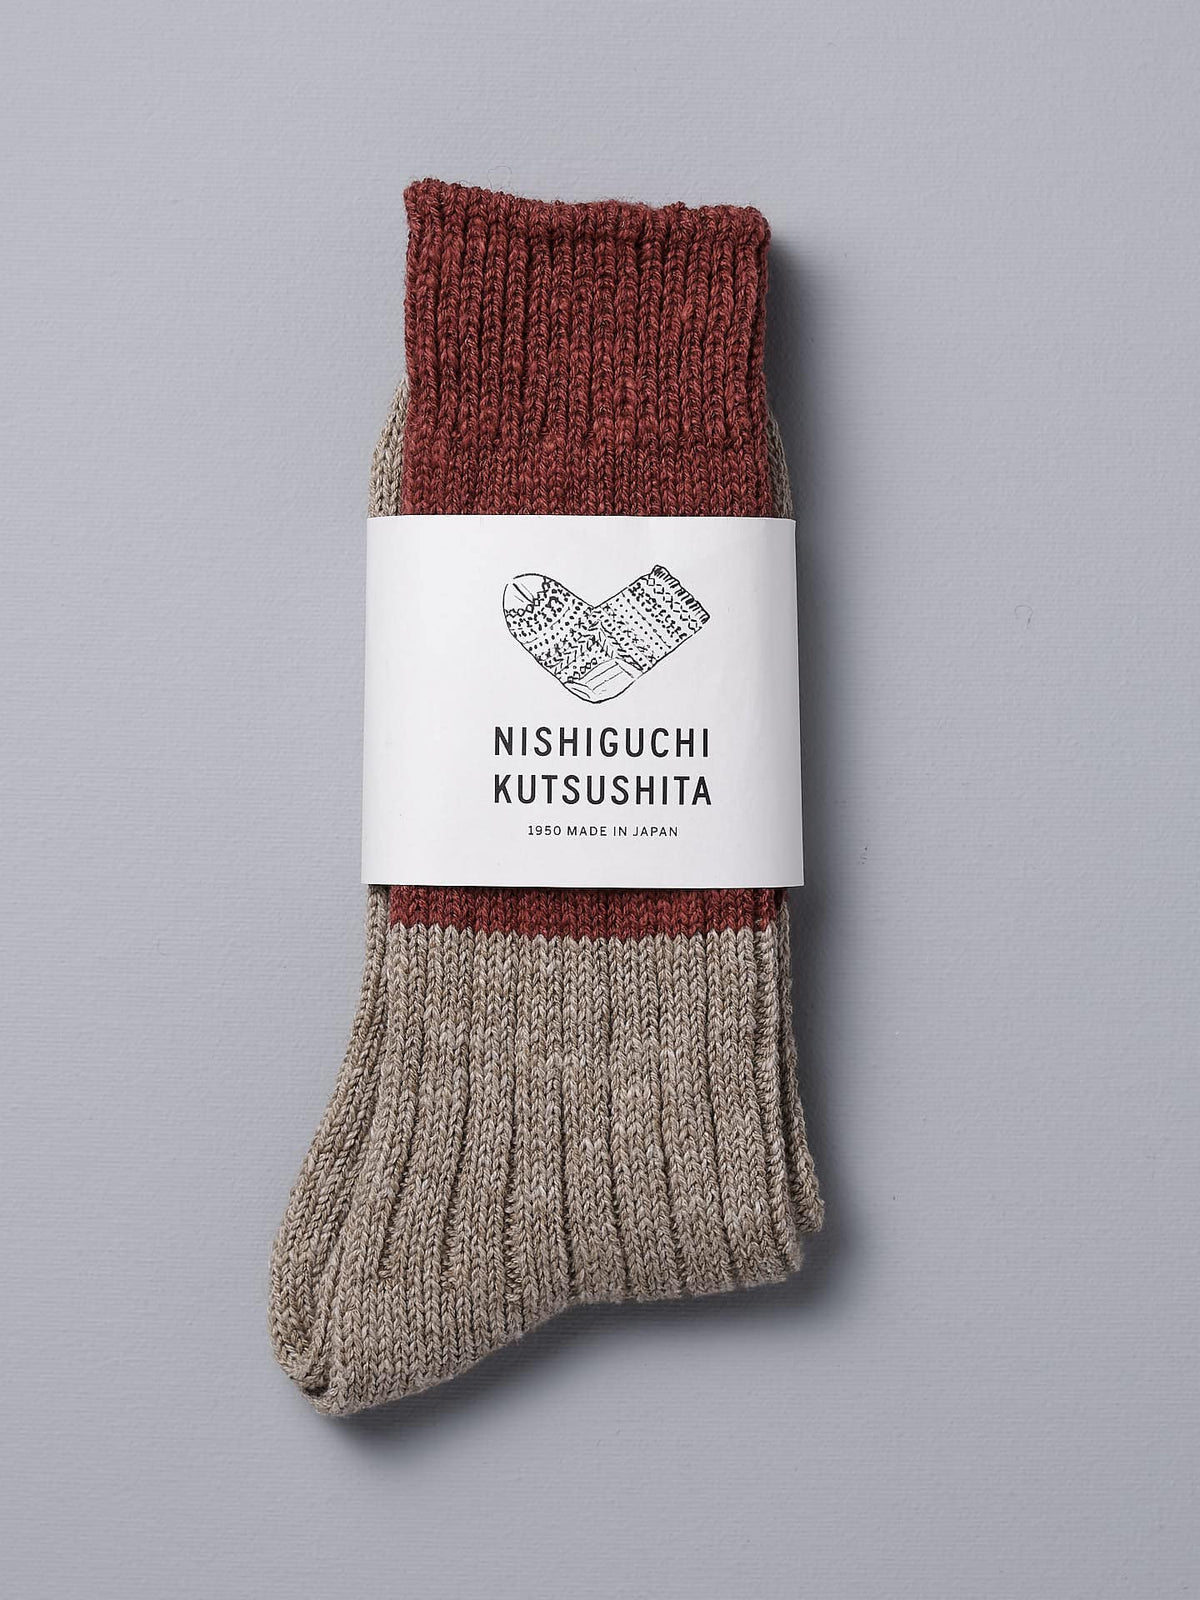 A pair of Boston Slab Socks – Red Brick with a Nishiguchi Kutsushita label.